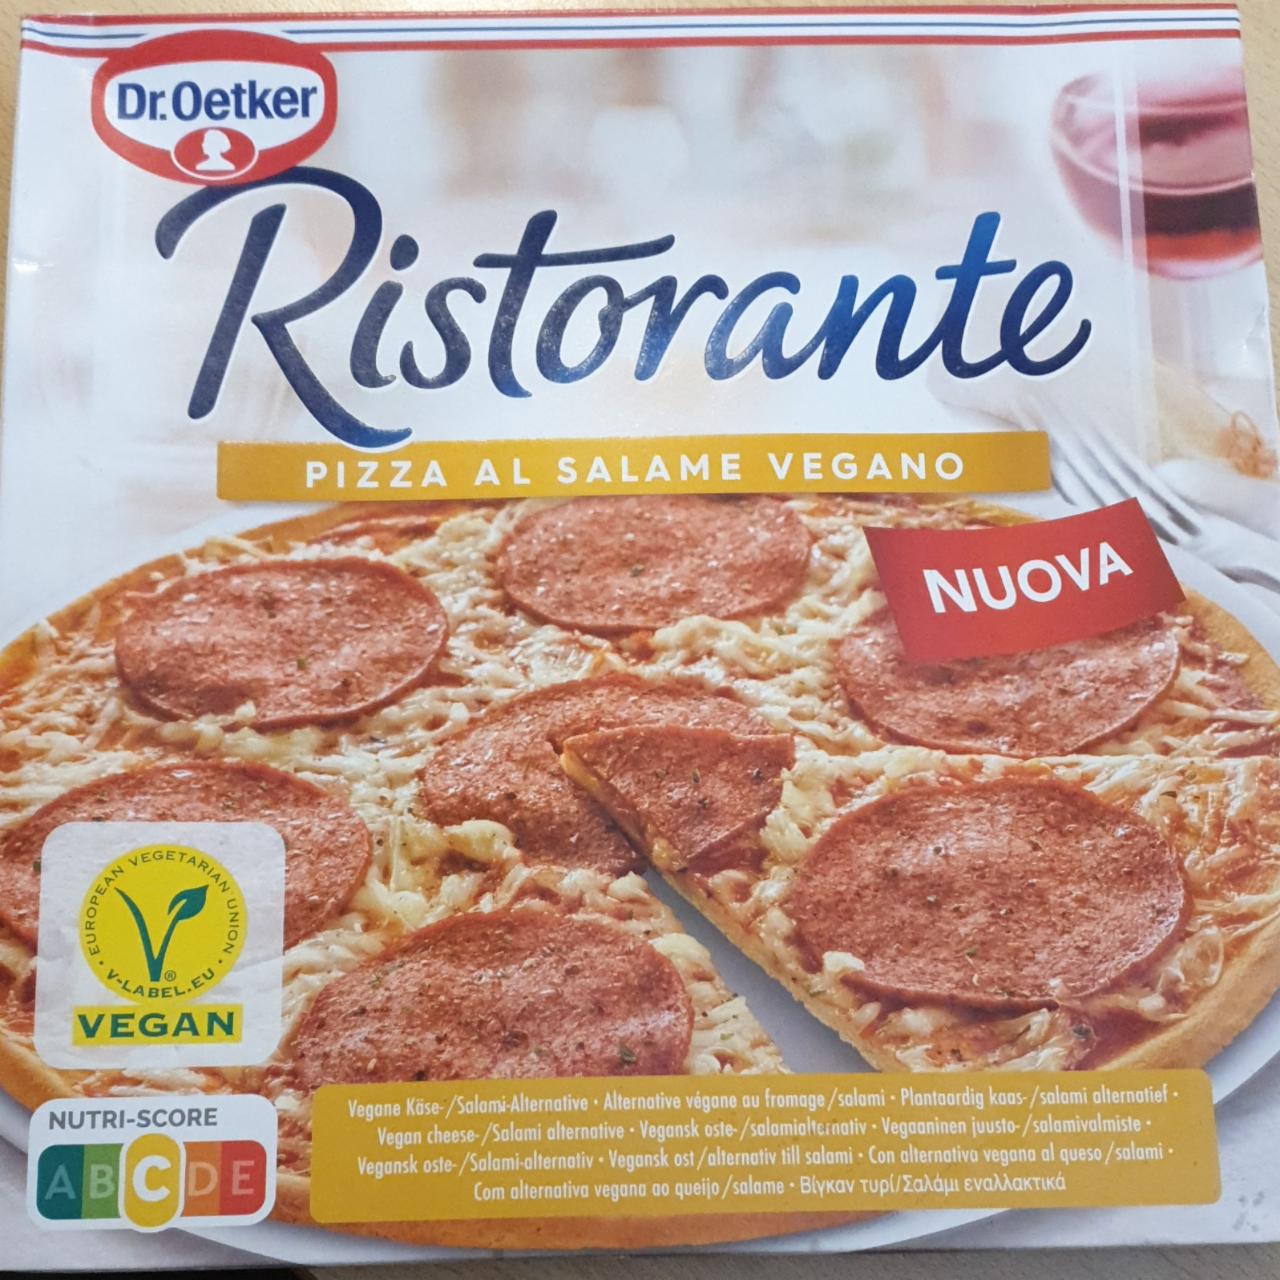 Фото - пиццп веганская с салями Ristorante Pizza al salame vegano Dr.Oetker